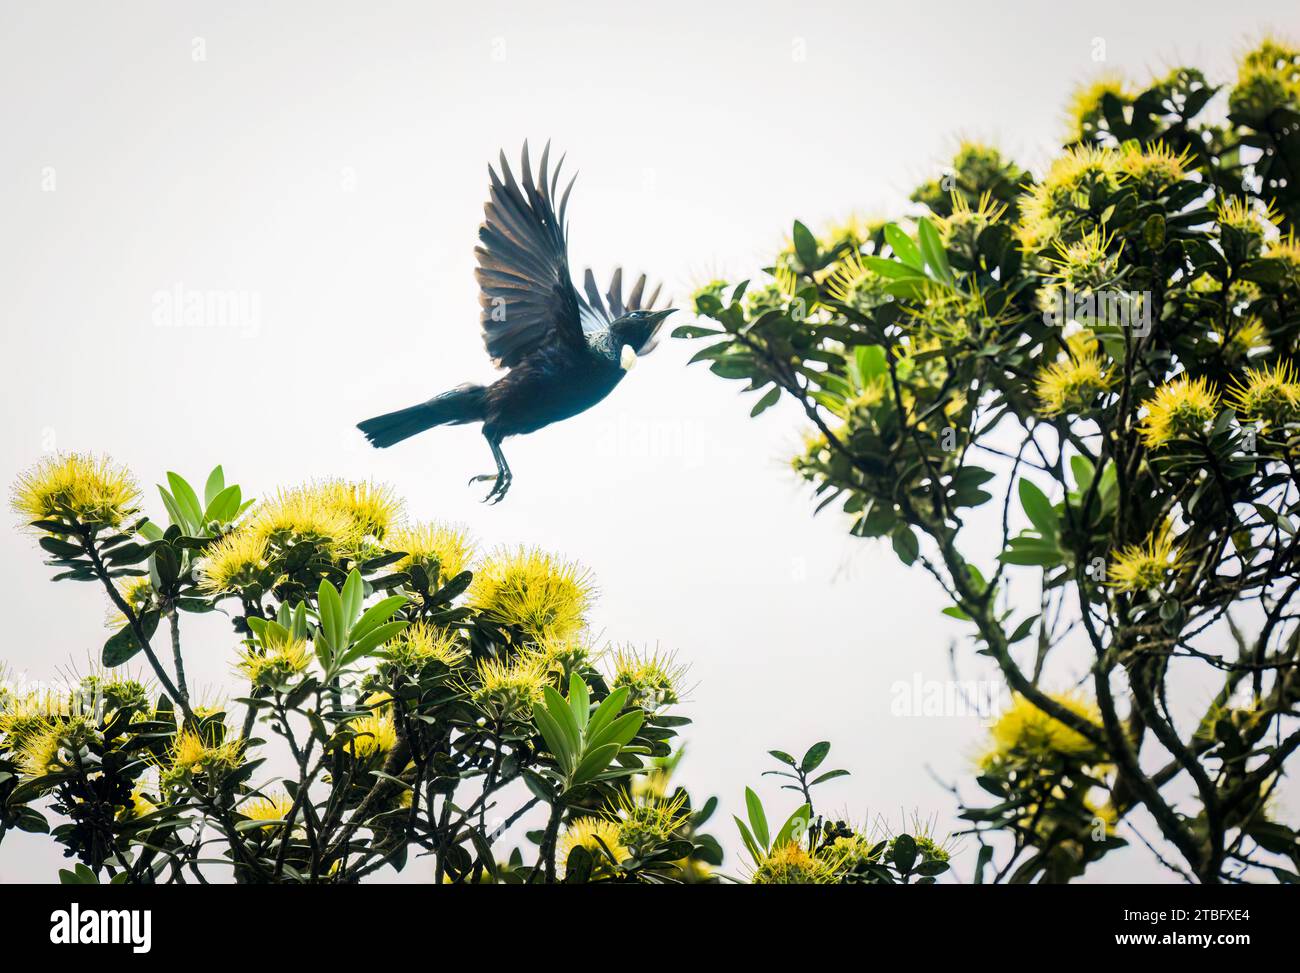 Tui bird taking off from yellow Pohutukawa flowers. New Zealand Christmas tree. Auckland. Stock Photo